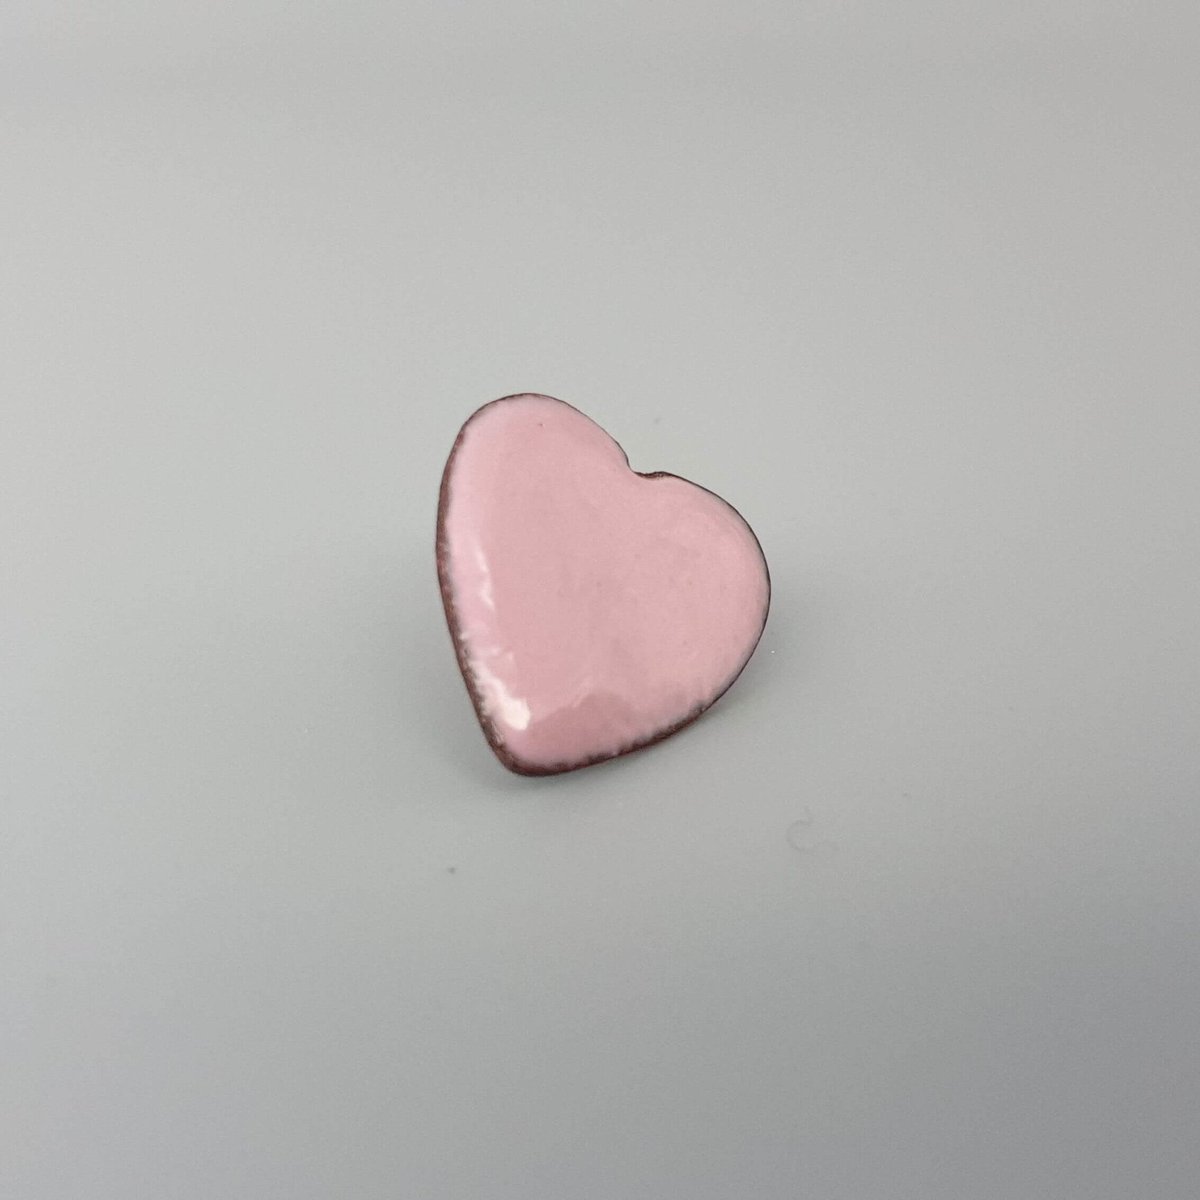 Enamel Heart Brooch tuppu.net/657e8f02 #MHHSBD #bizbubble ##UKGiftHour #shopsmall #inbizhour #UKHashtags #giftideas #HandmadeHour #Valentines